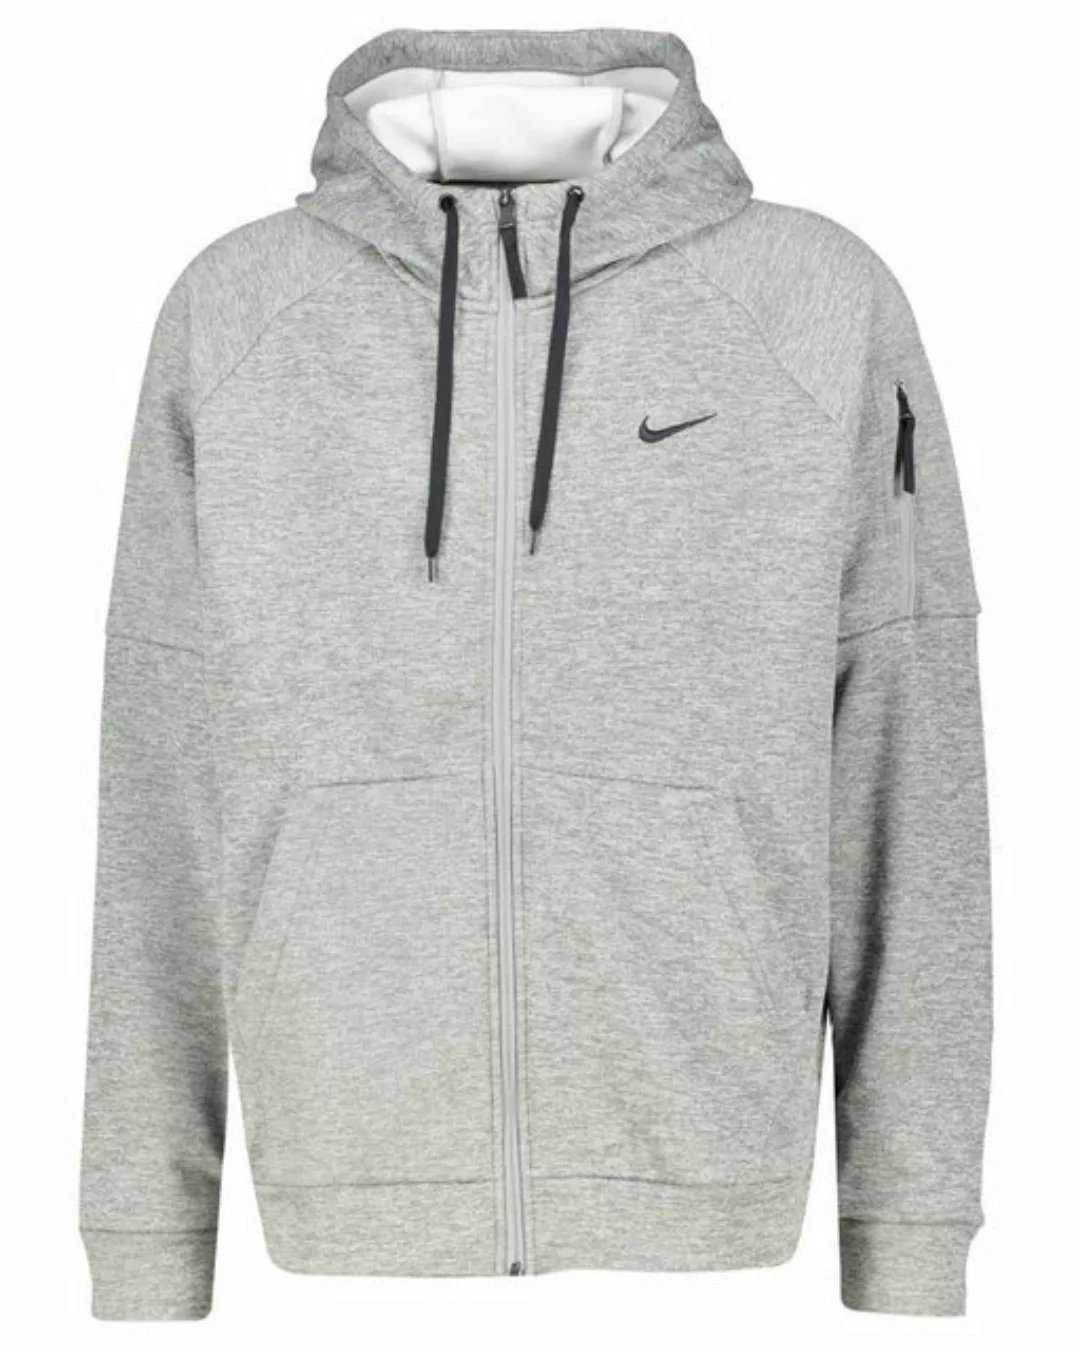 Nike Sweatjacke Herren Trainingsjacke THERMA-FIT (1-tlg) günstig online kaufen